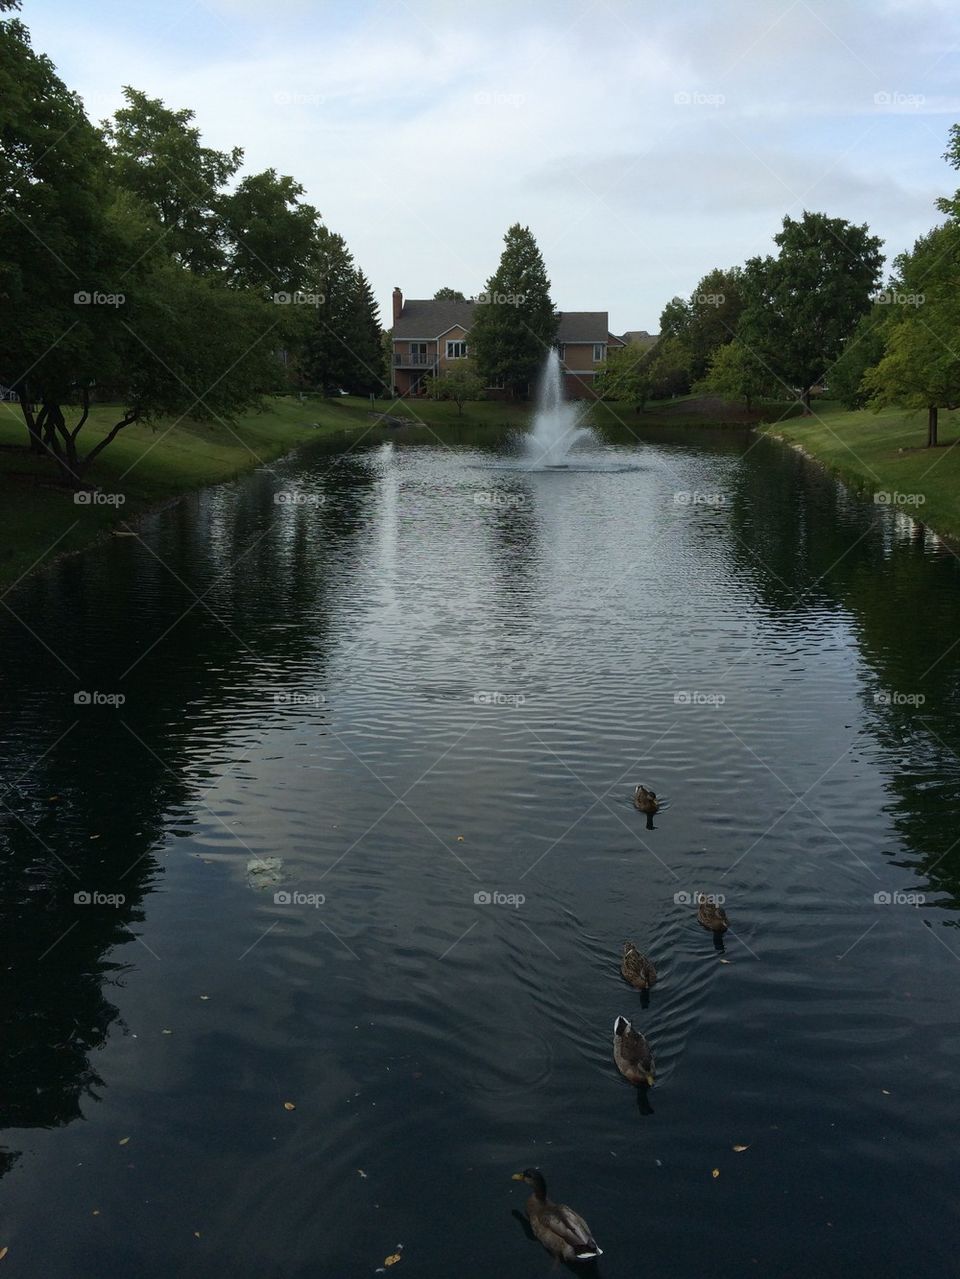 Ducks in Ponds